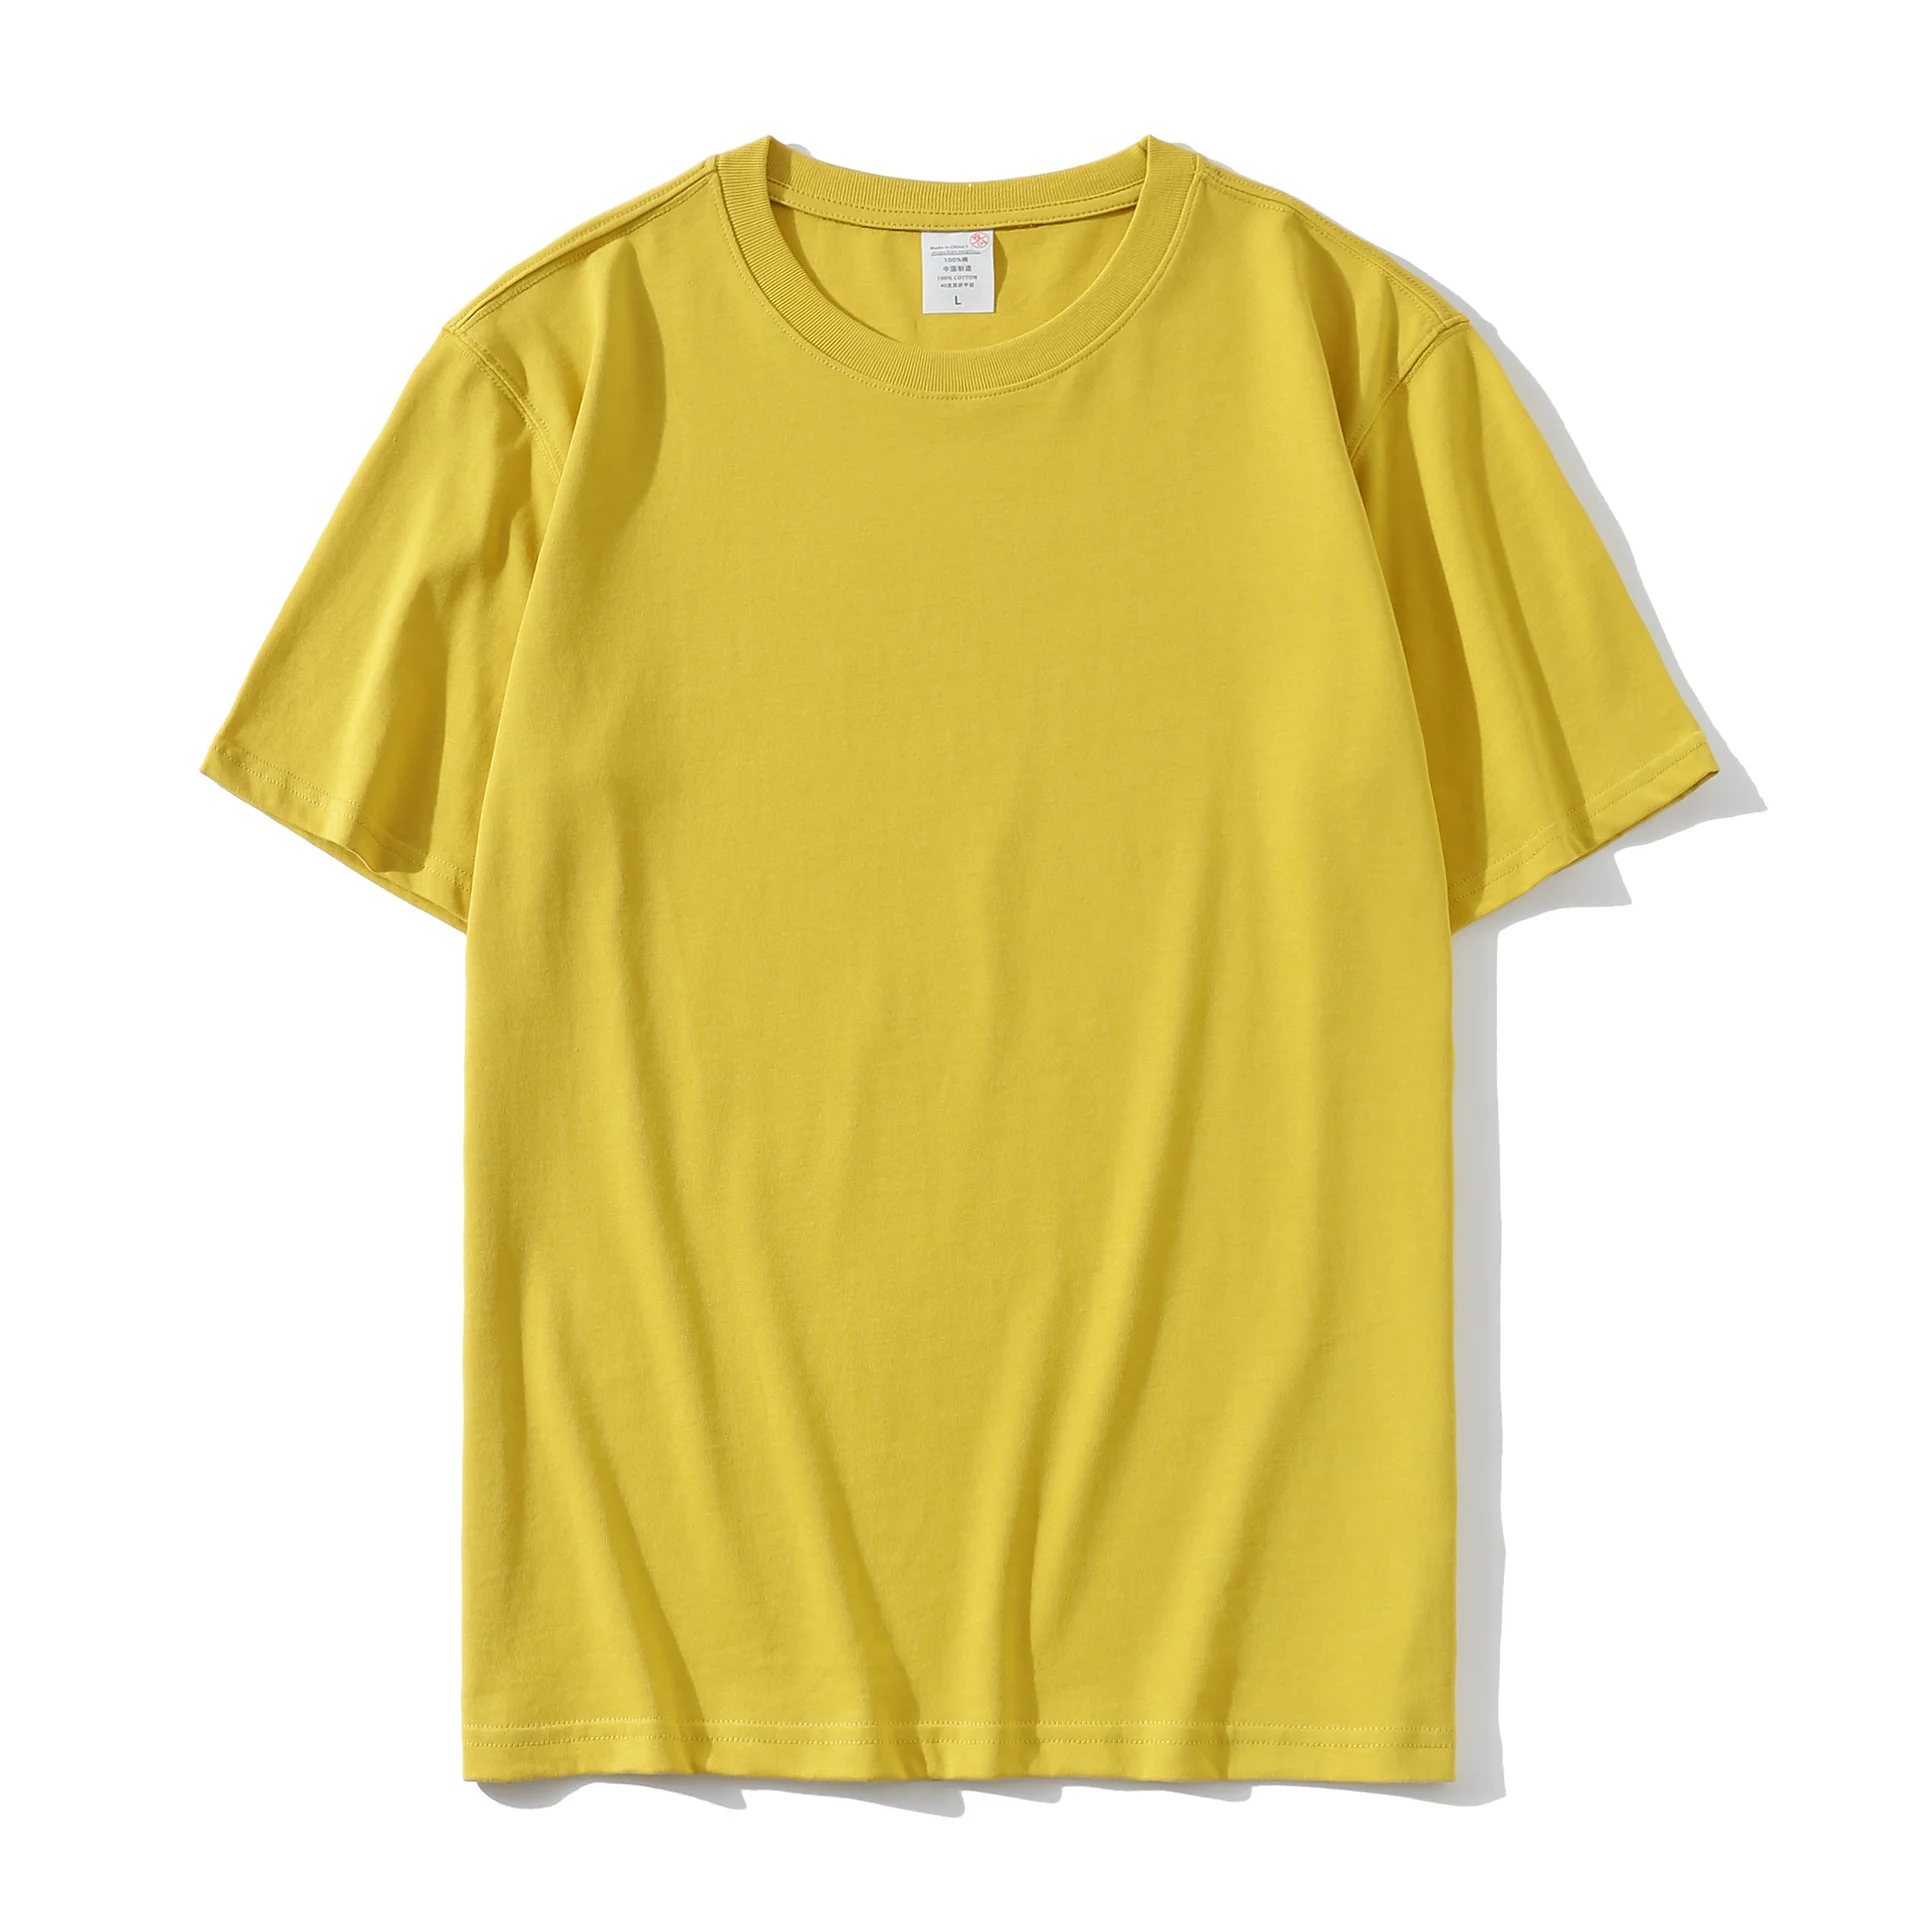 Yellow Blank T-shirts from Bangladesh Bulk T-shirts Manufacturer